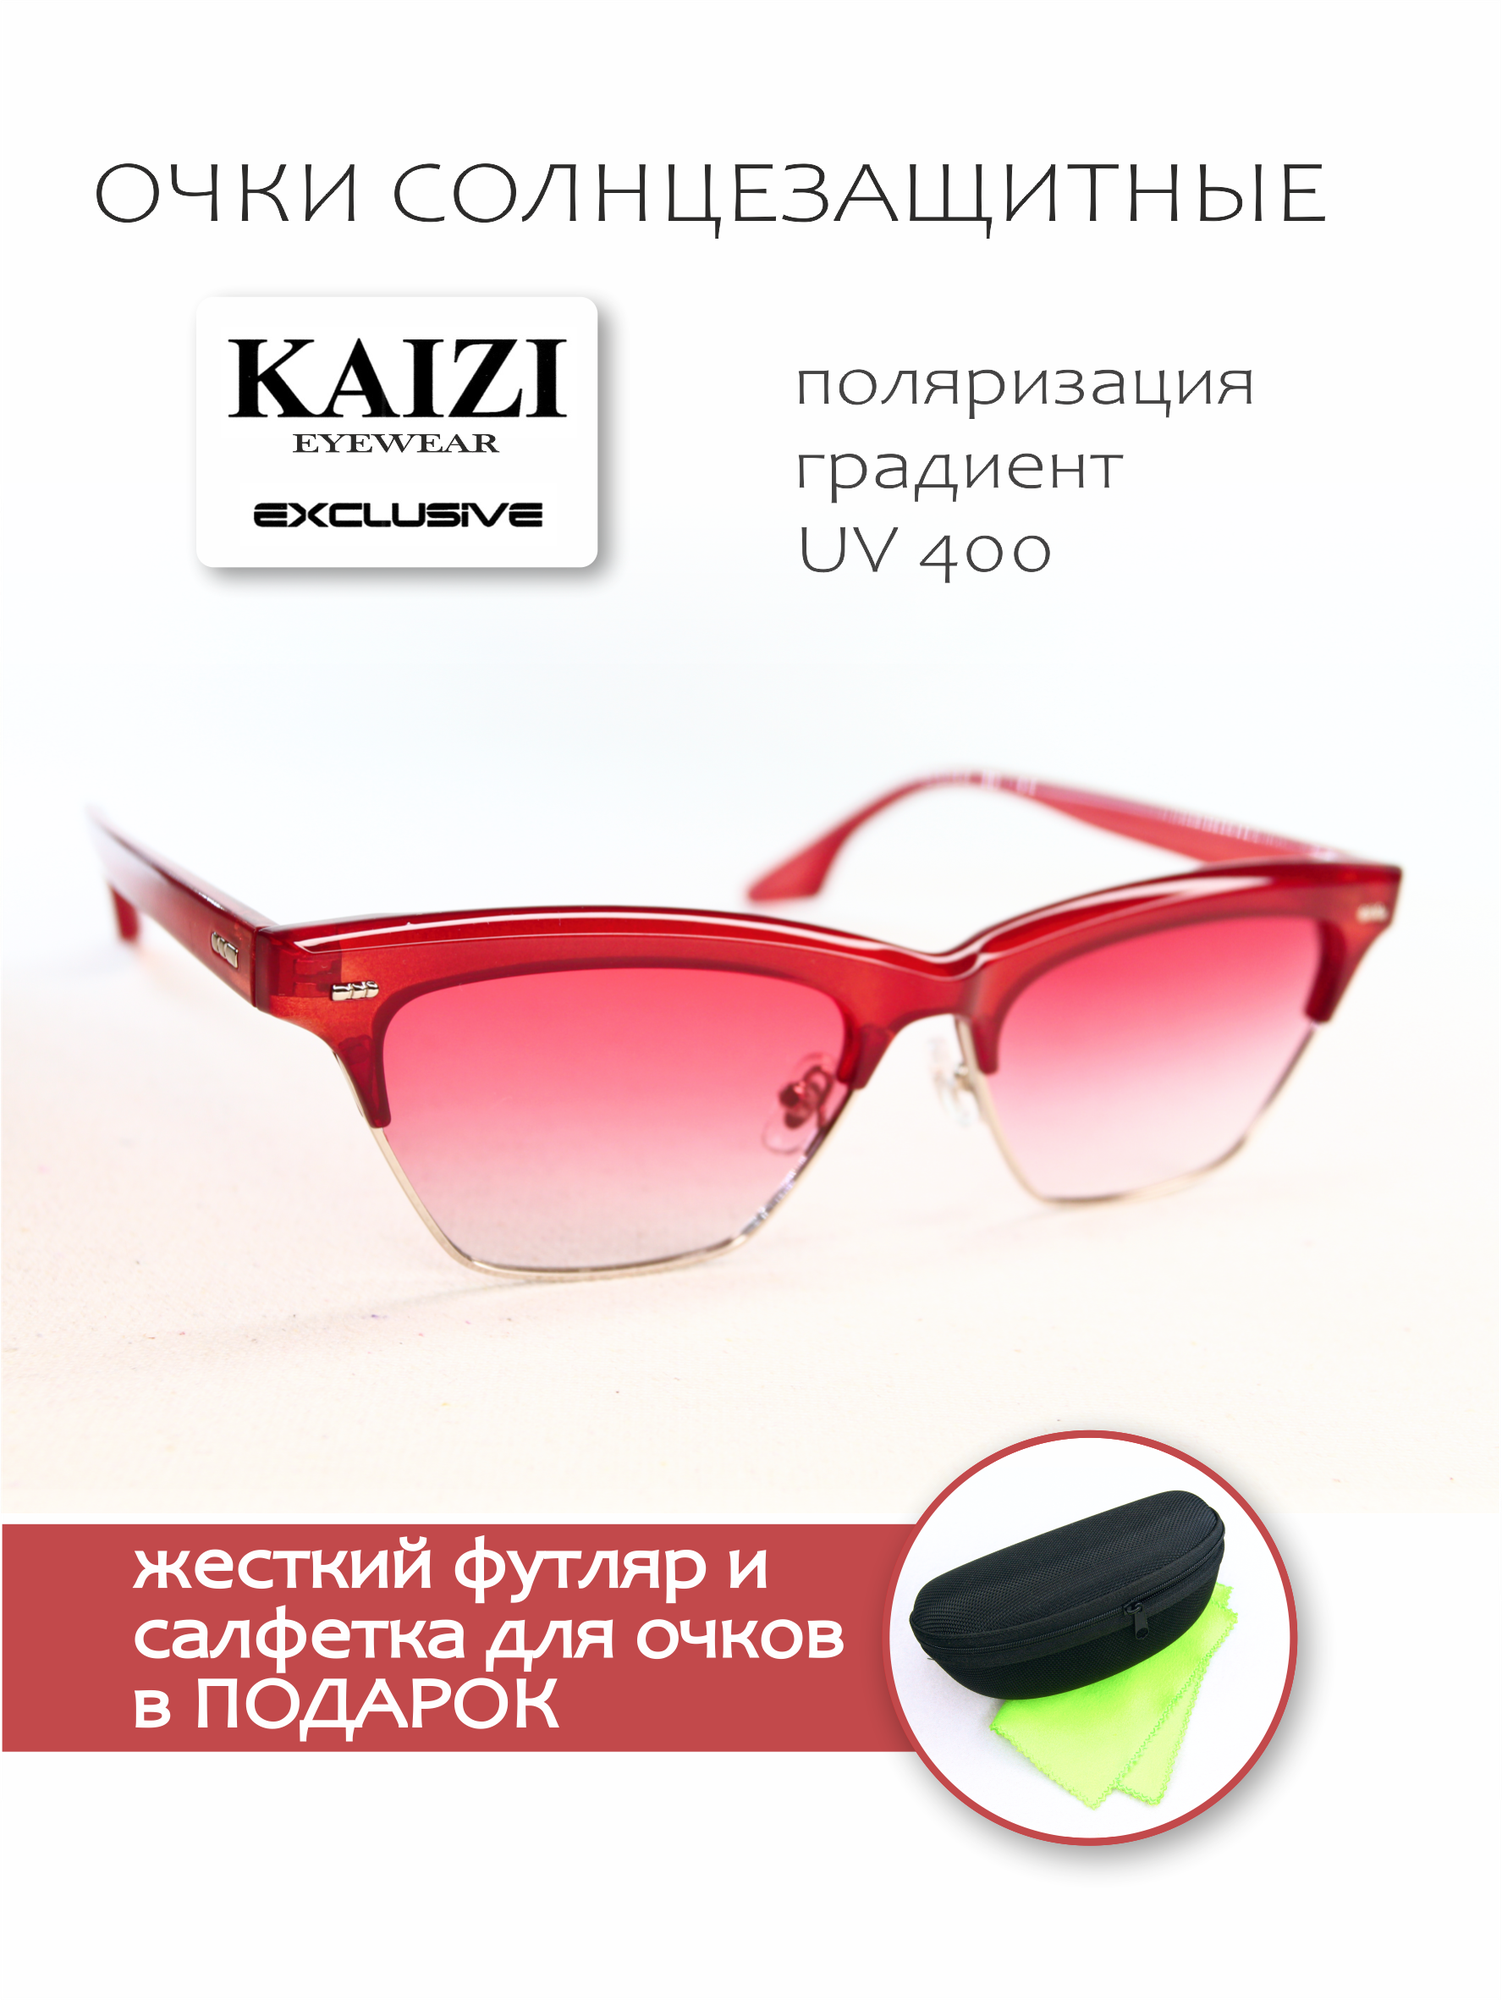 Солнцезащитные очки Kaizi